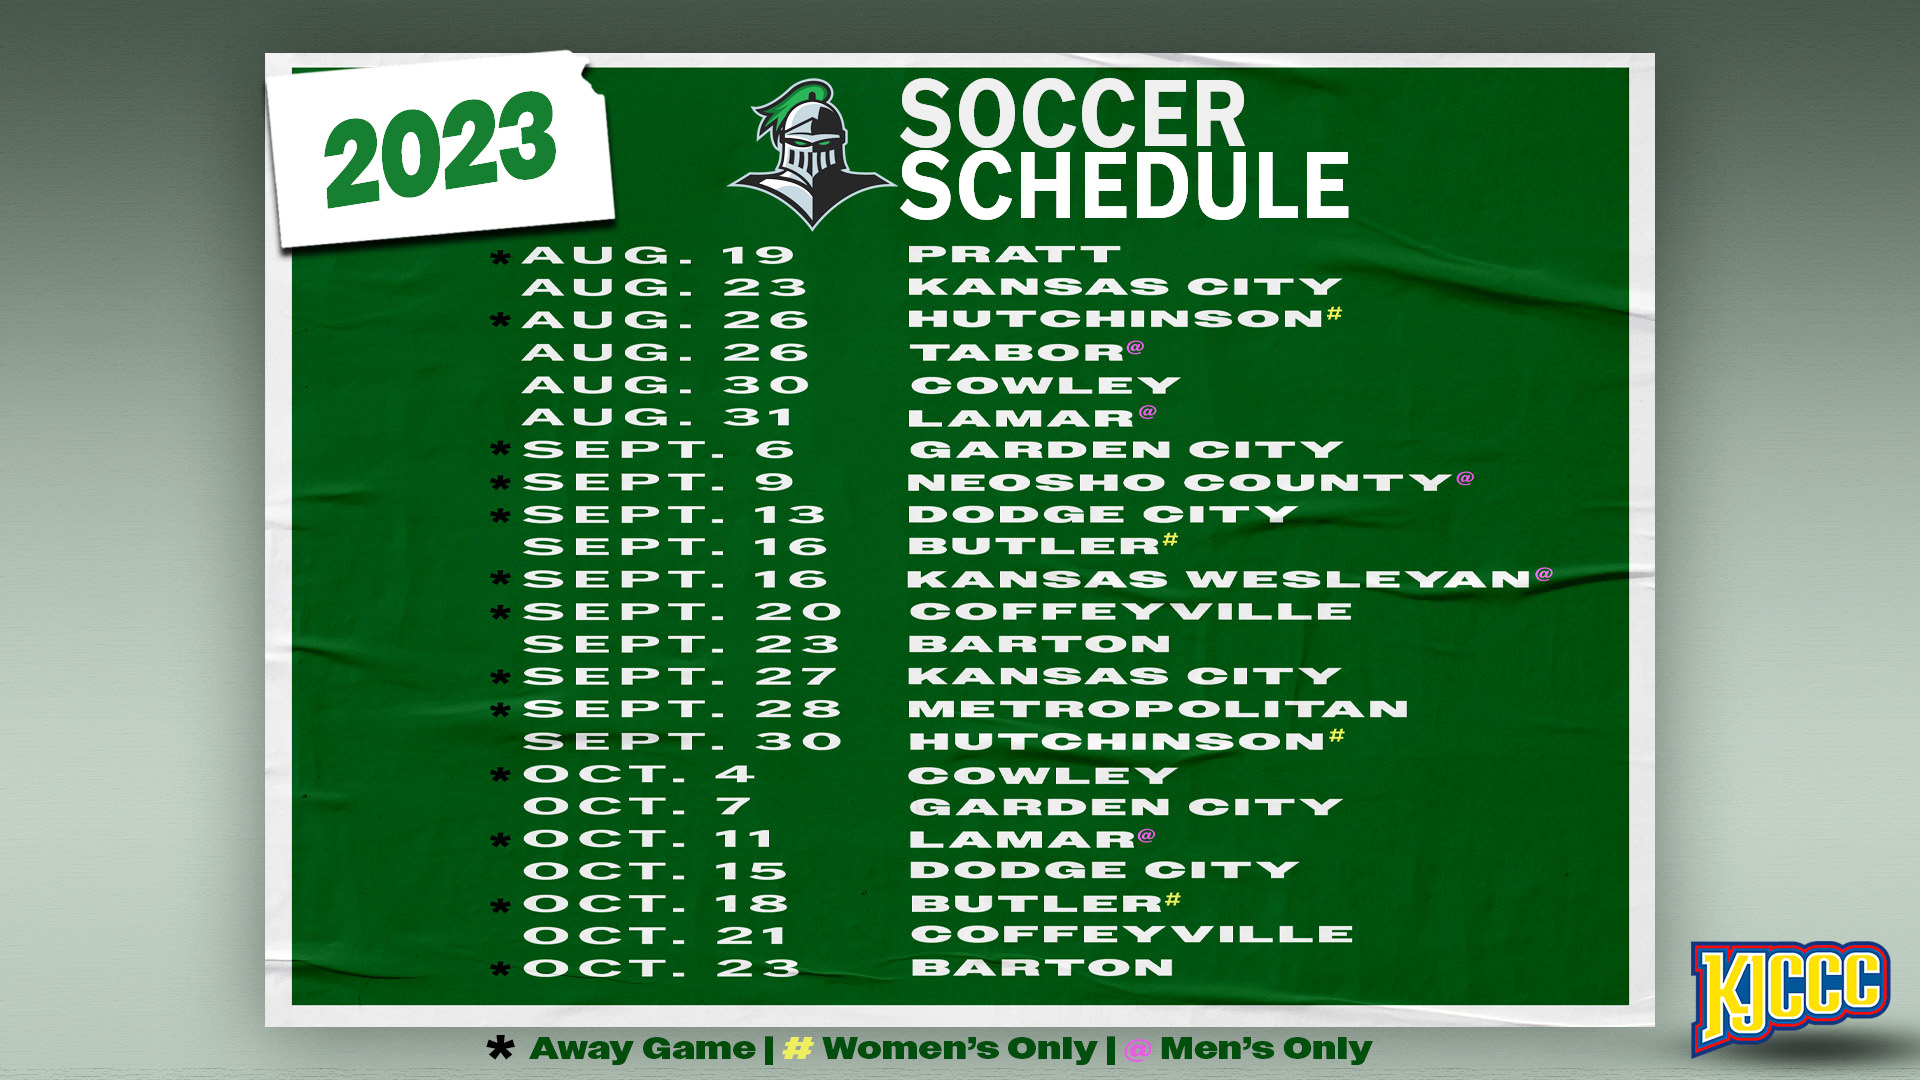 Seward Releases 1st Soccer Schedule